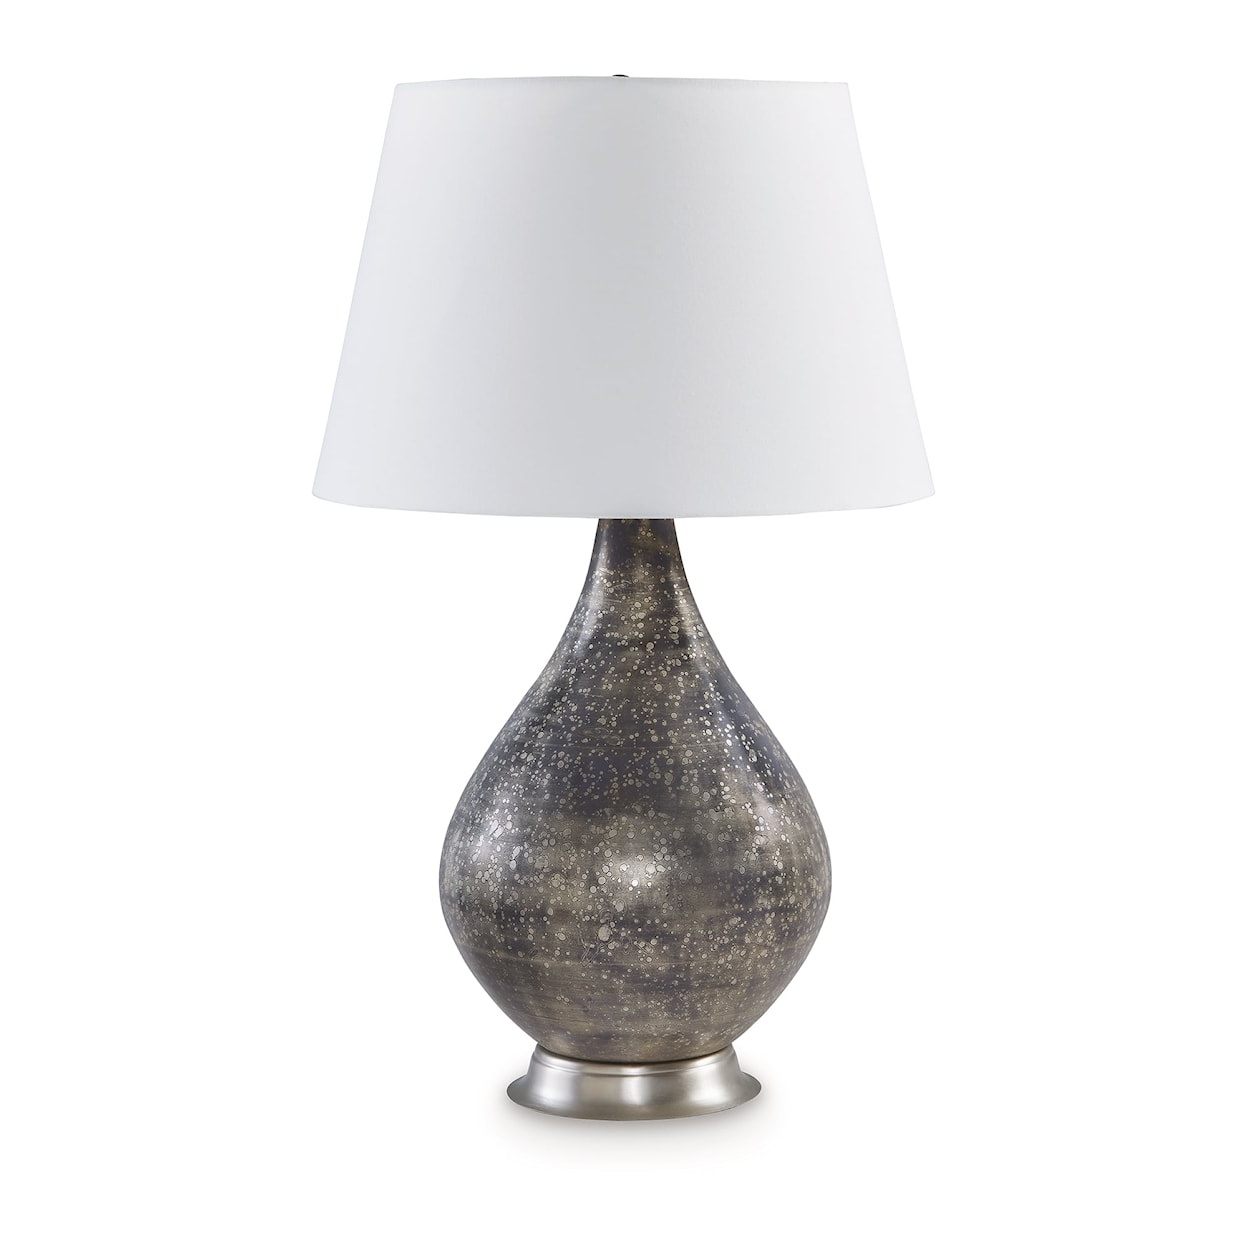 Ashley Furniture Signature Design Bluacy Glass Table Lamp